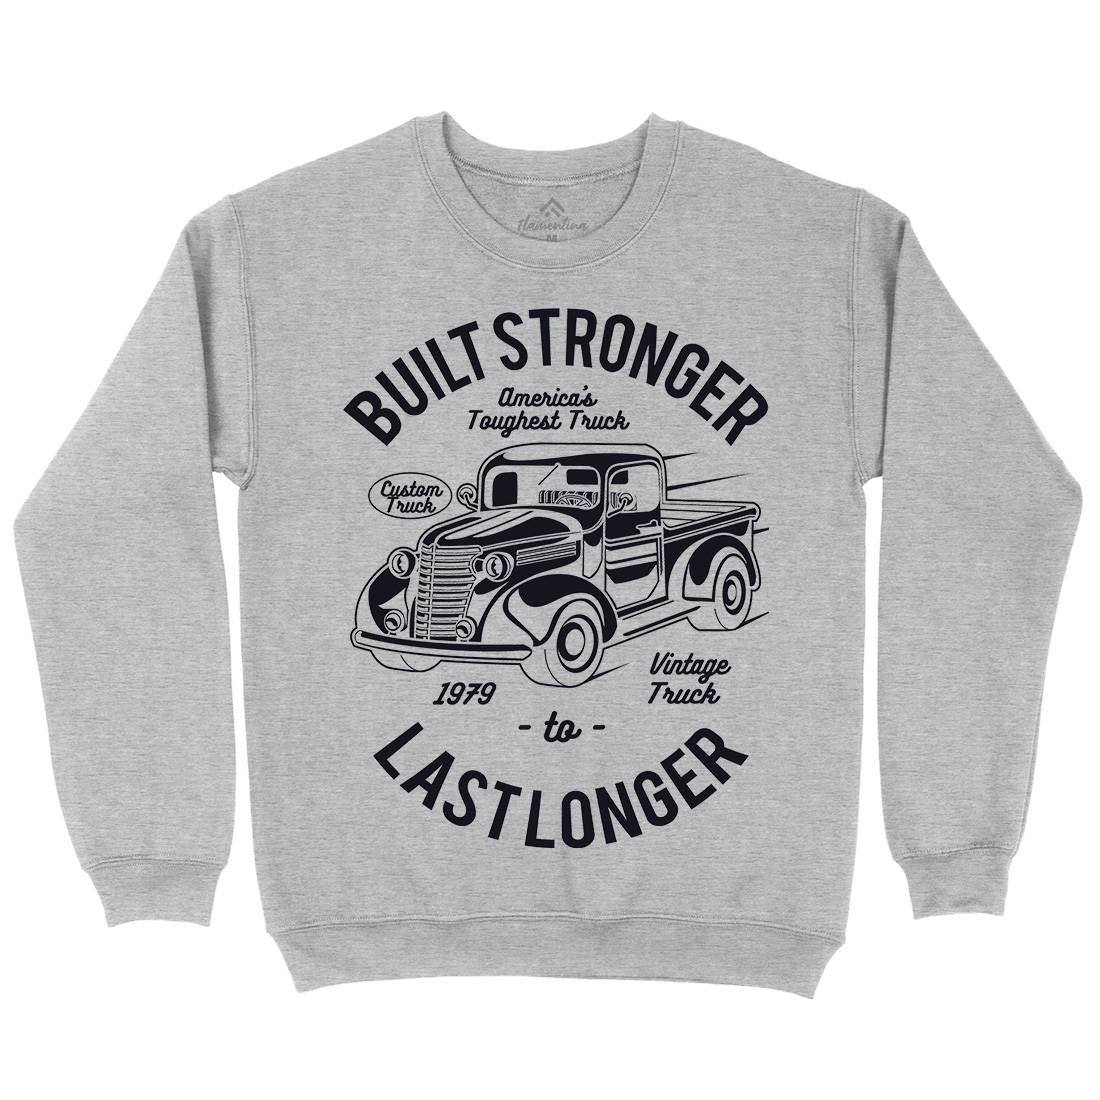 Built Stronger Mens Crew Neck Sweatshirt Cars A023